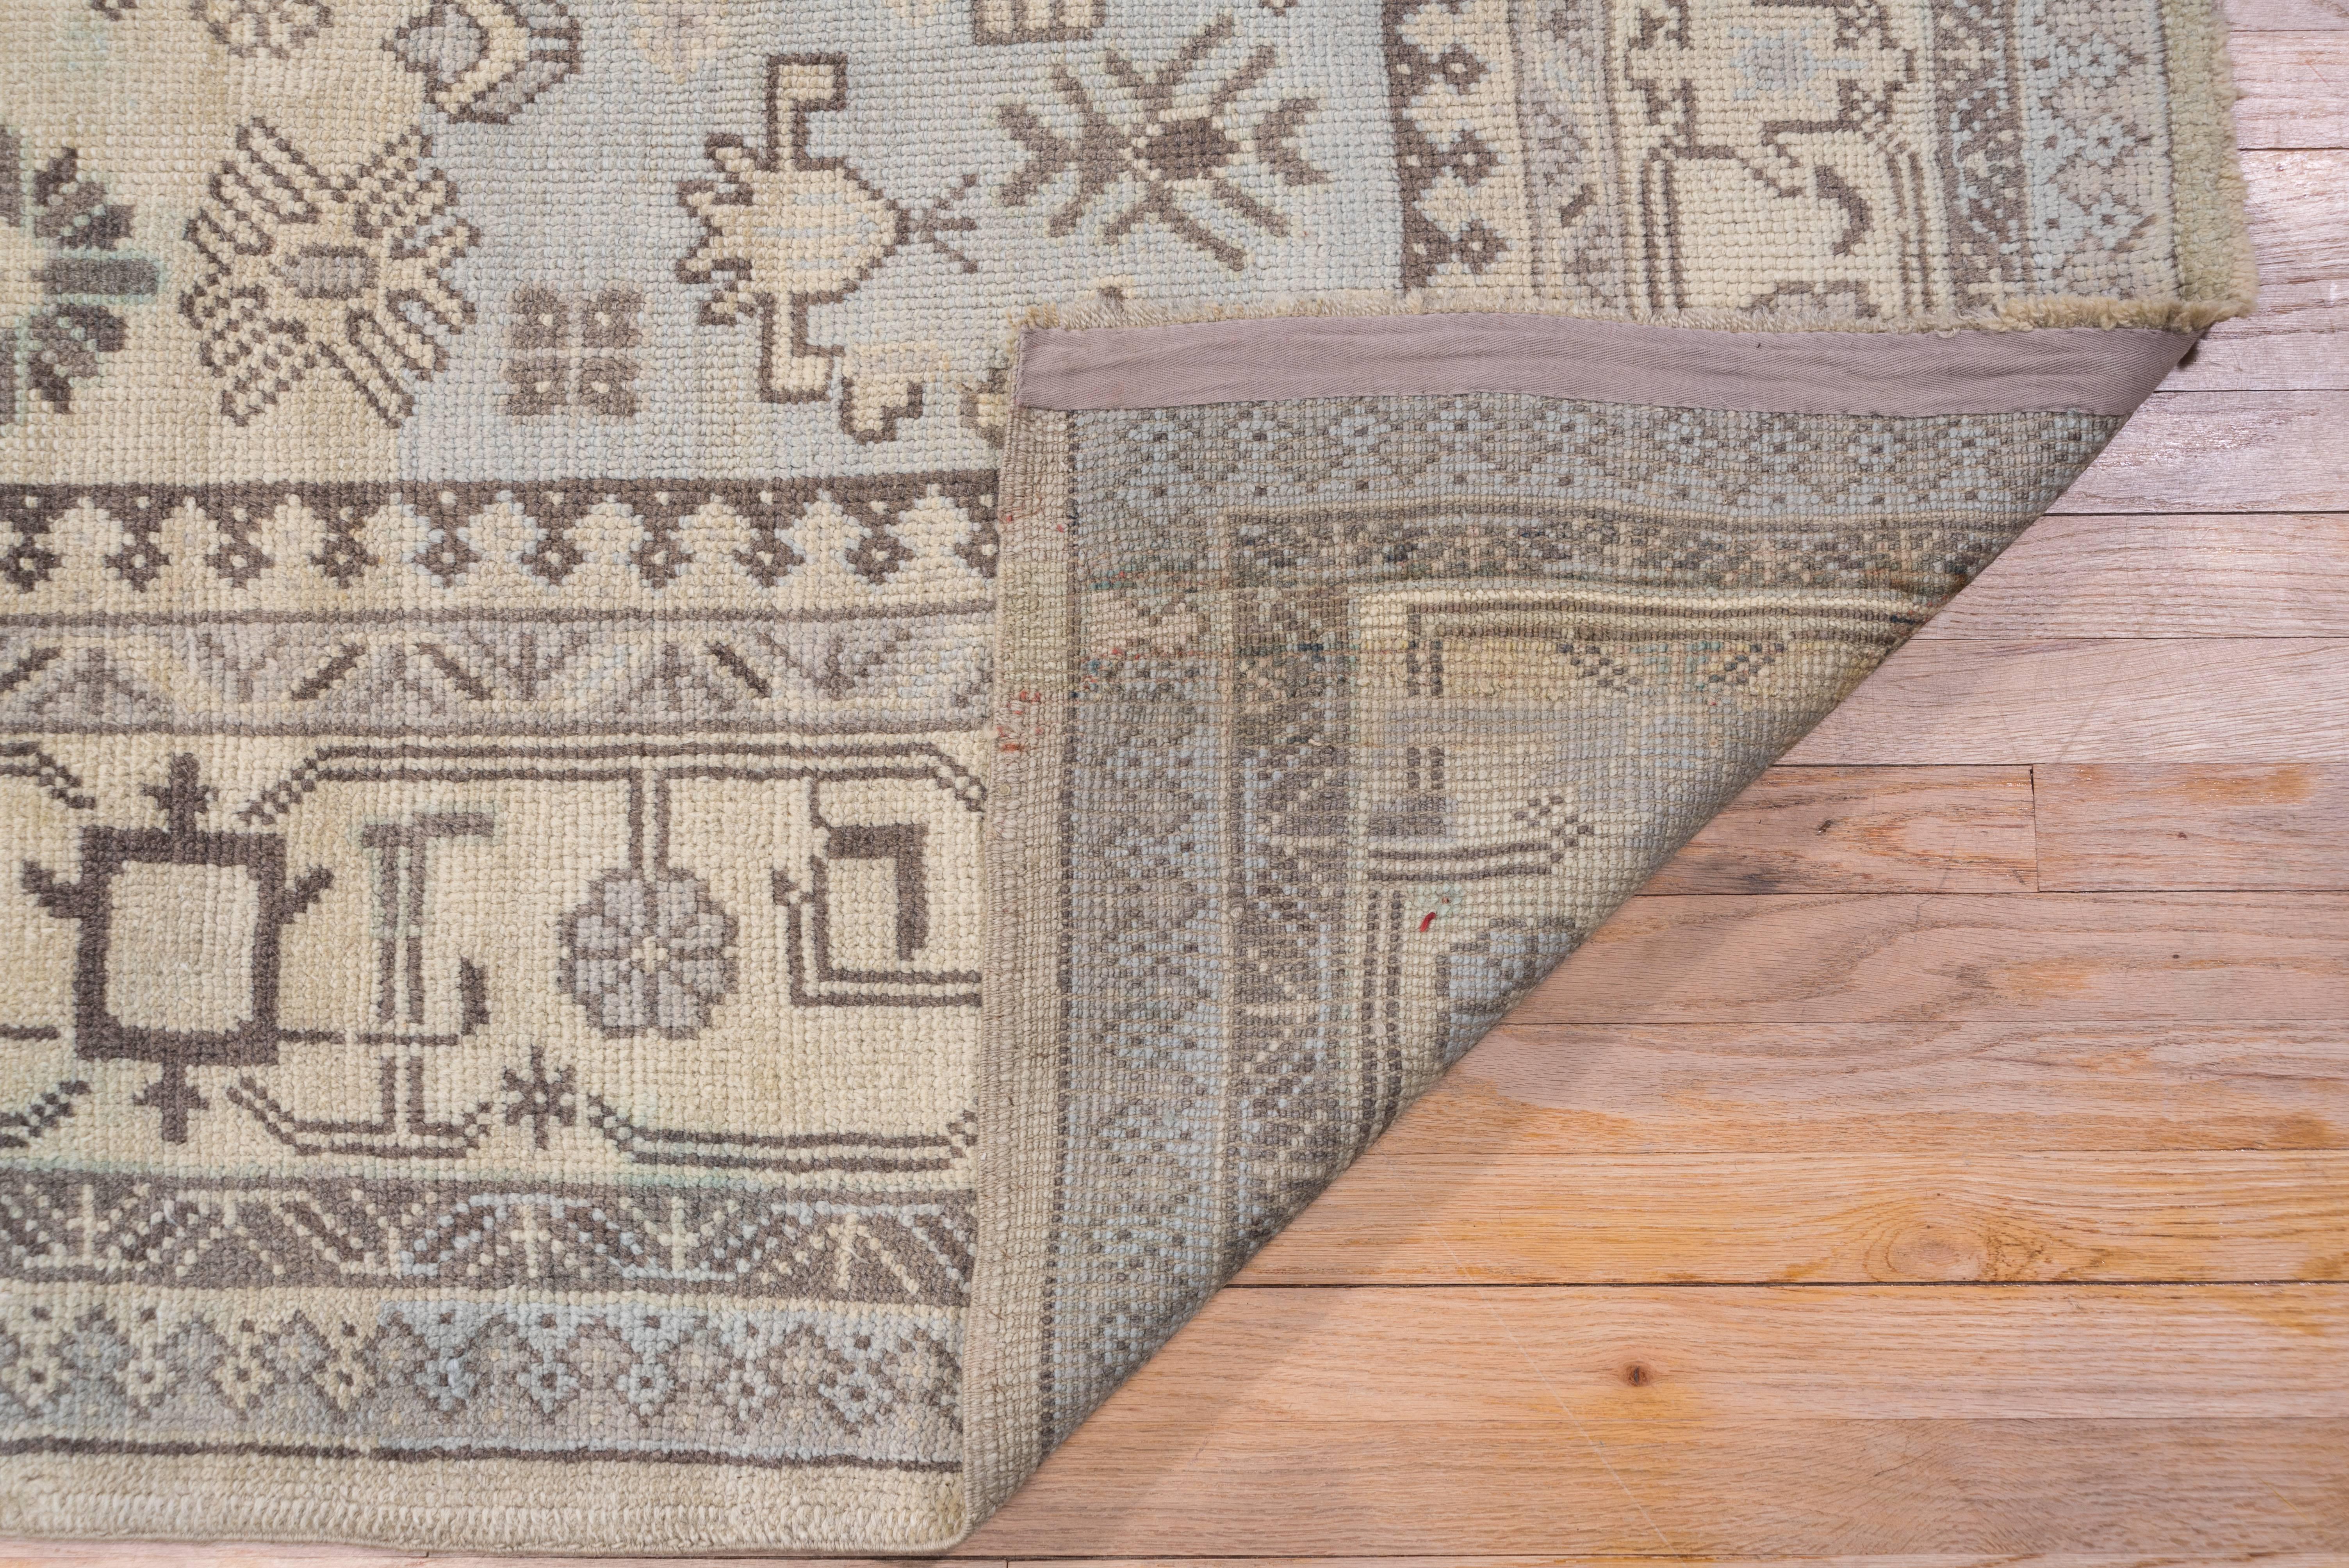 Turkish Antique Oushak Carpet